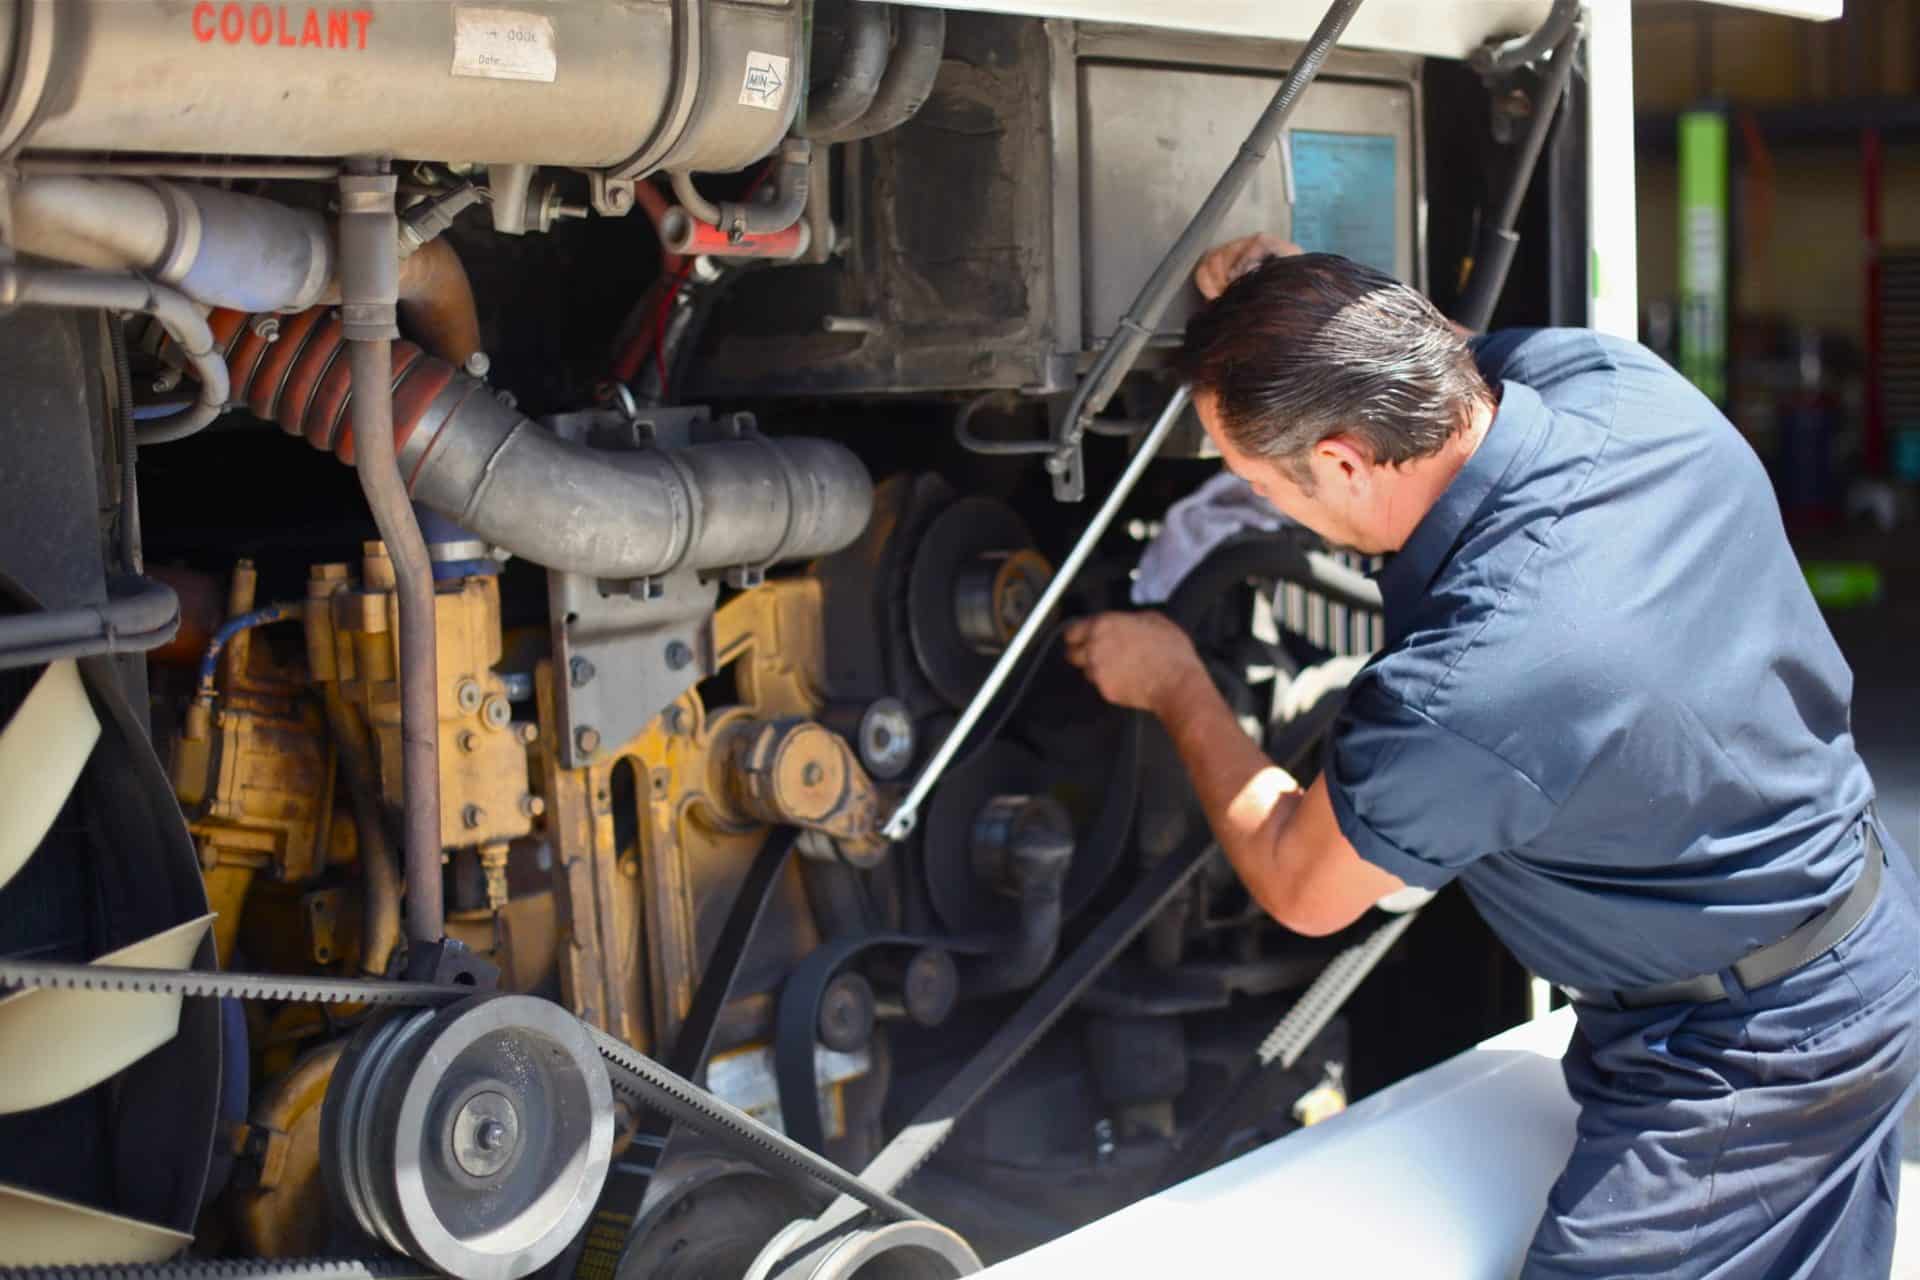 TCS employee working on bus mechanics inside engine